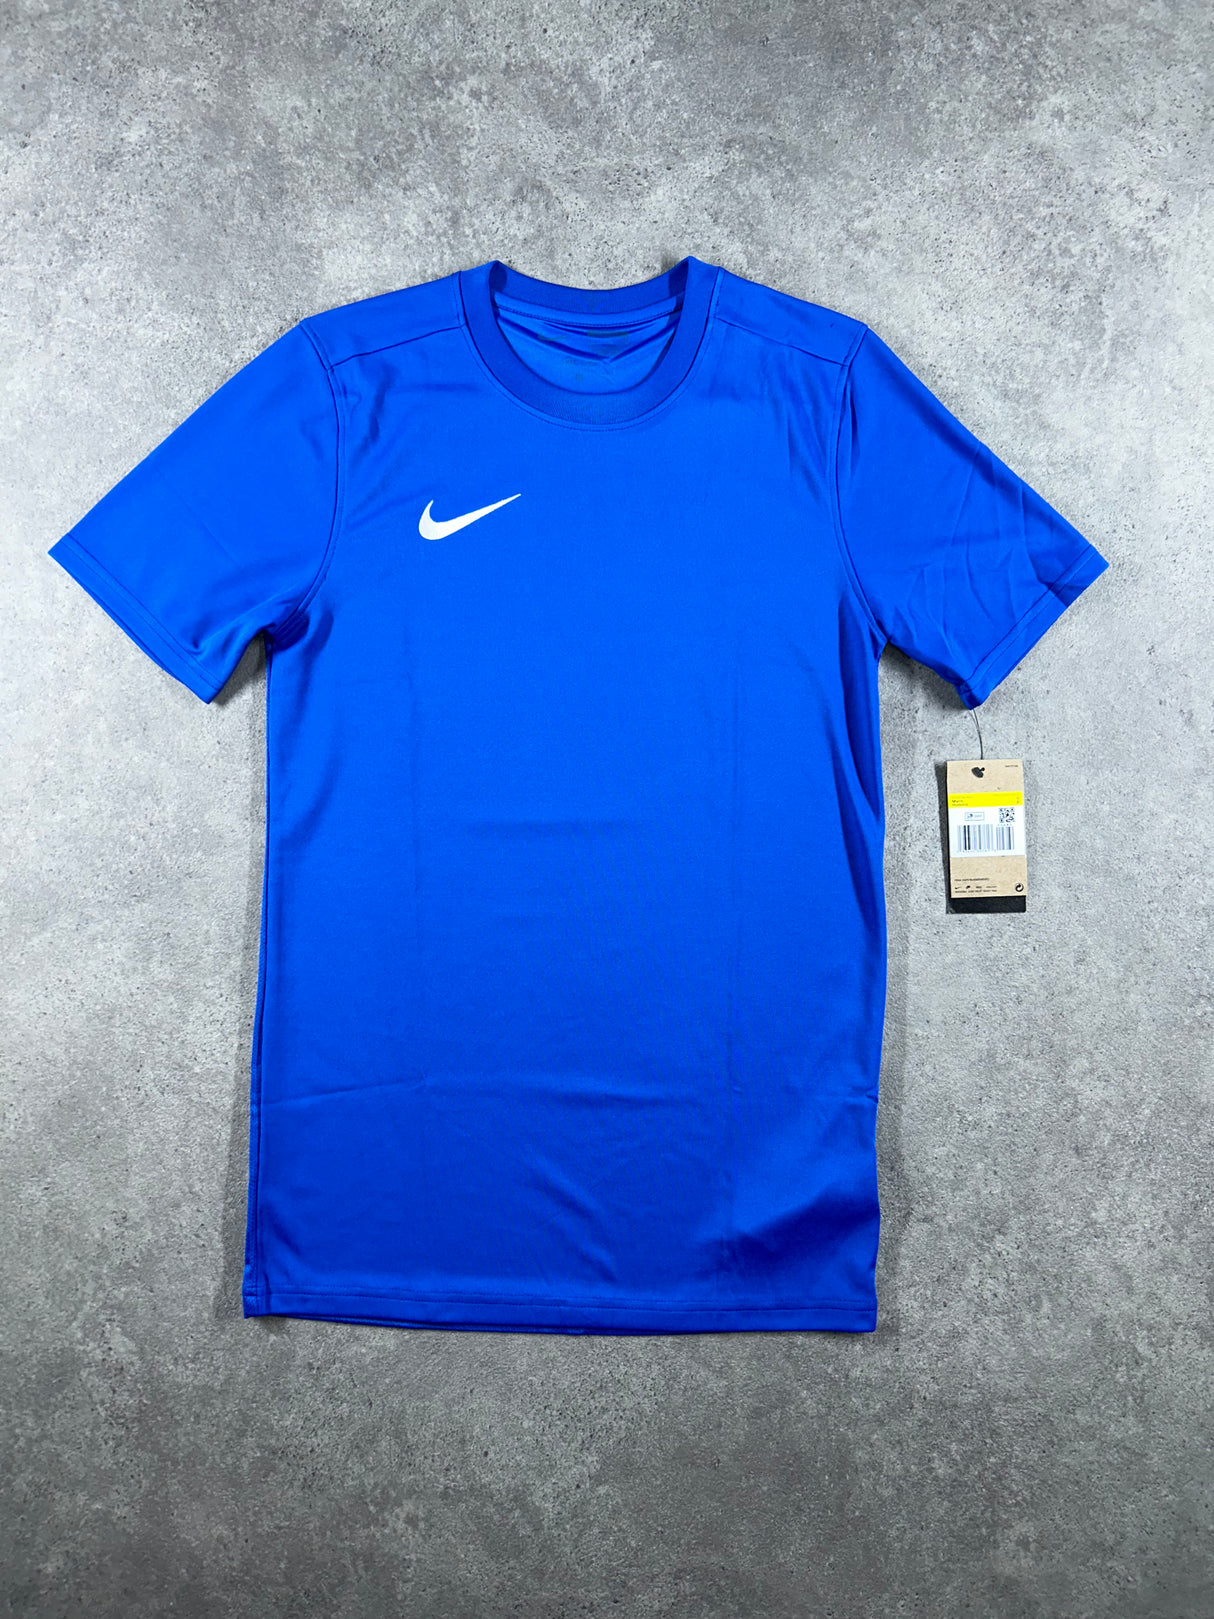 Nike - Dri Fit T Shirt - Royal Blue